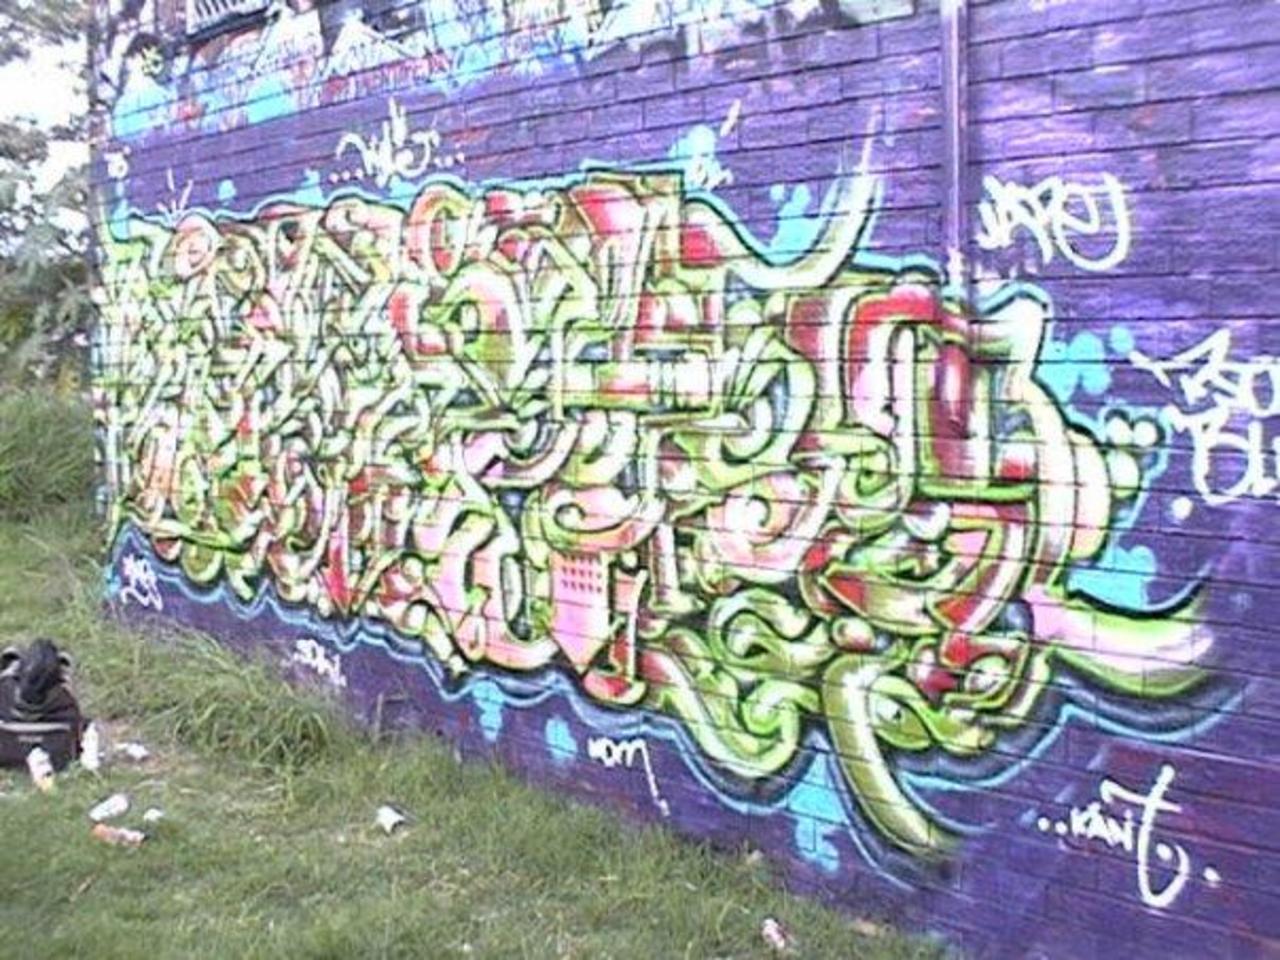 old skool wall #dewzer #kdmz #graff #graffiti #ths #art #oldskool #hiphop #australia http://t.co/s5GdLdLYzJ